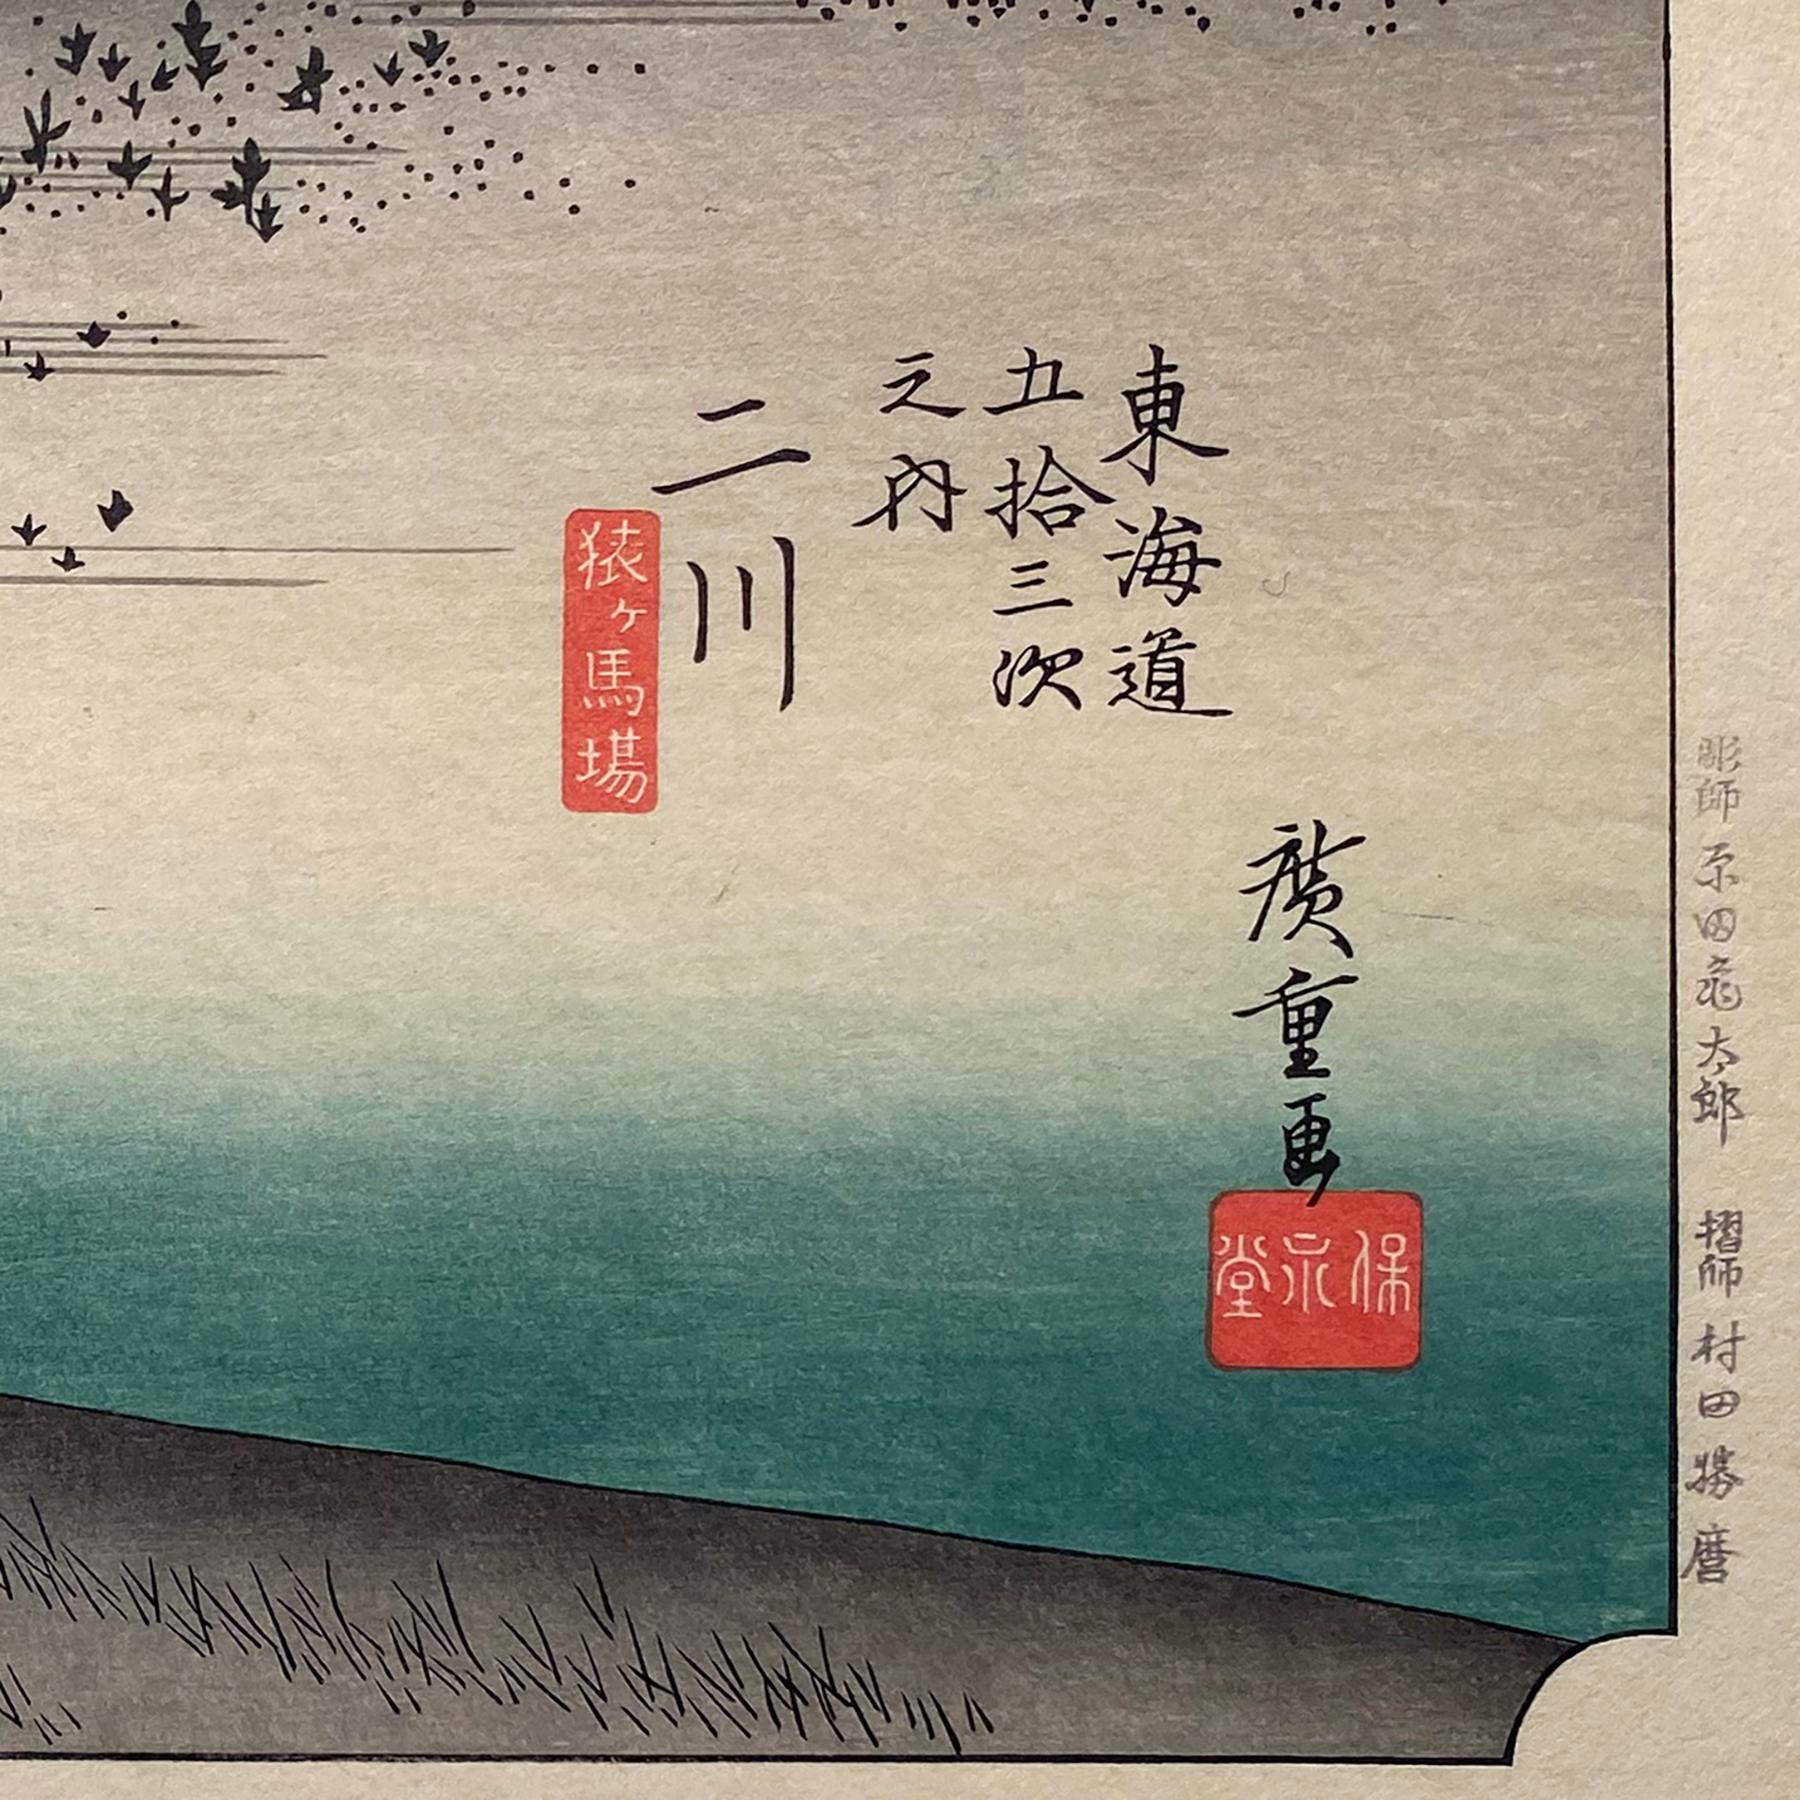 'View of Futakawa', After Utagawa Hiroshige 歌川廣重, Ukiyo-e Woodblock, Tokaido - Print by Utagawa Hiroshige (Ando Hiroshige)